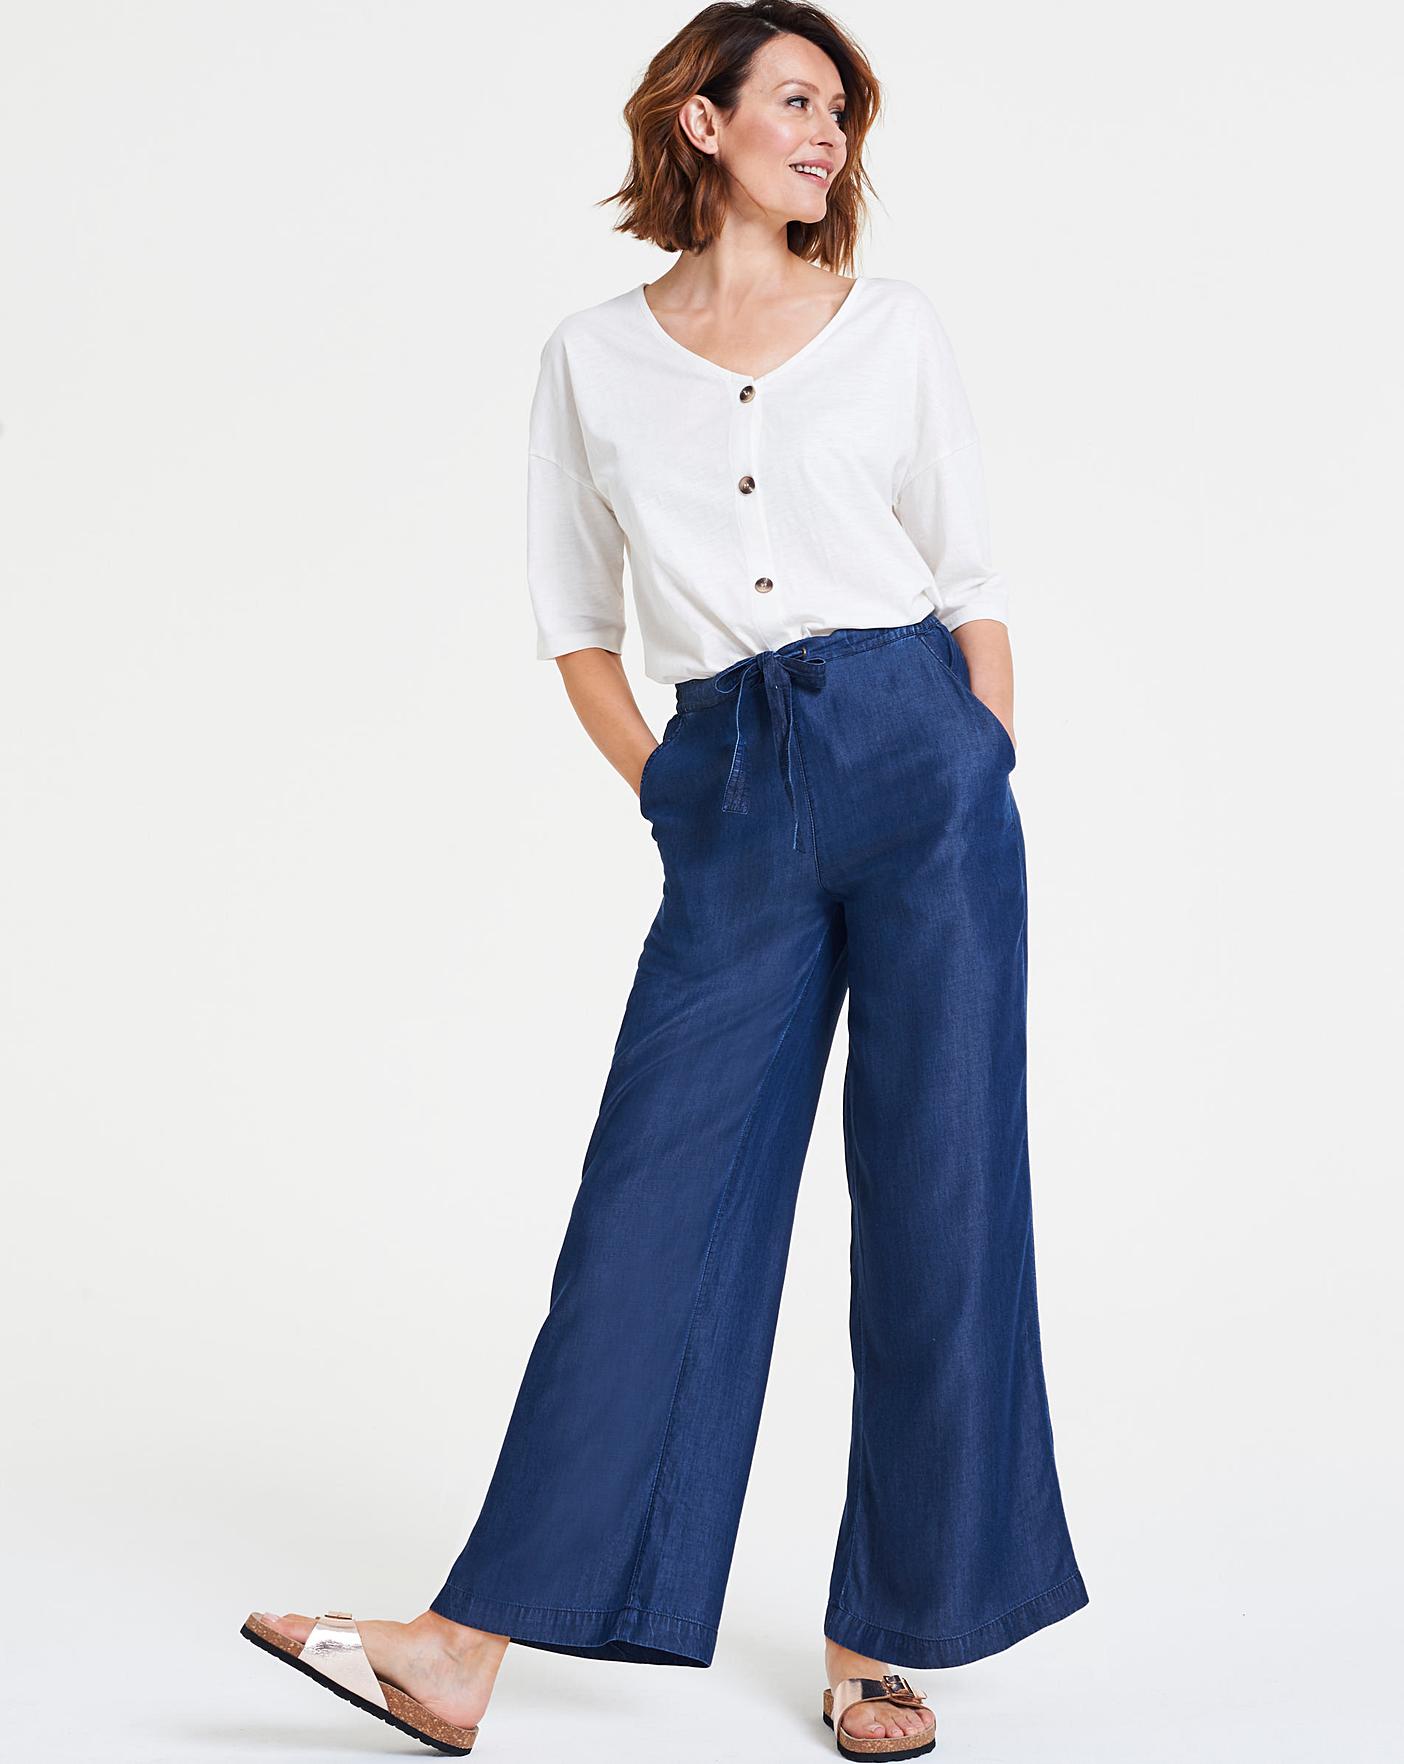 womens kevlar jeans plus size